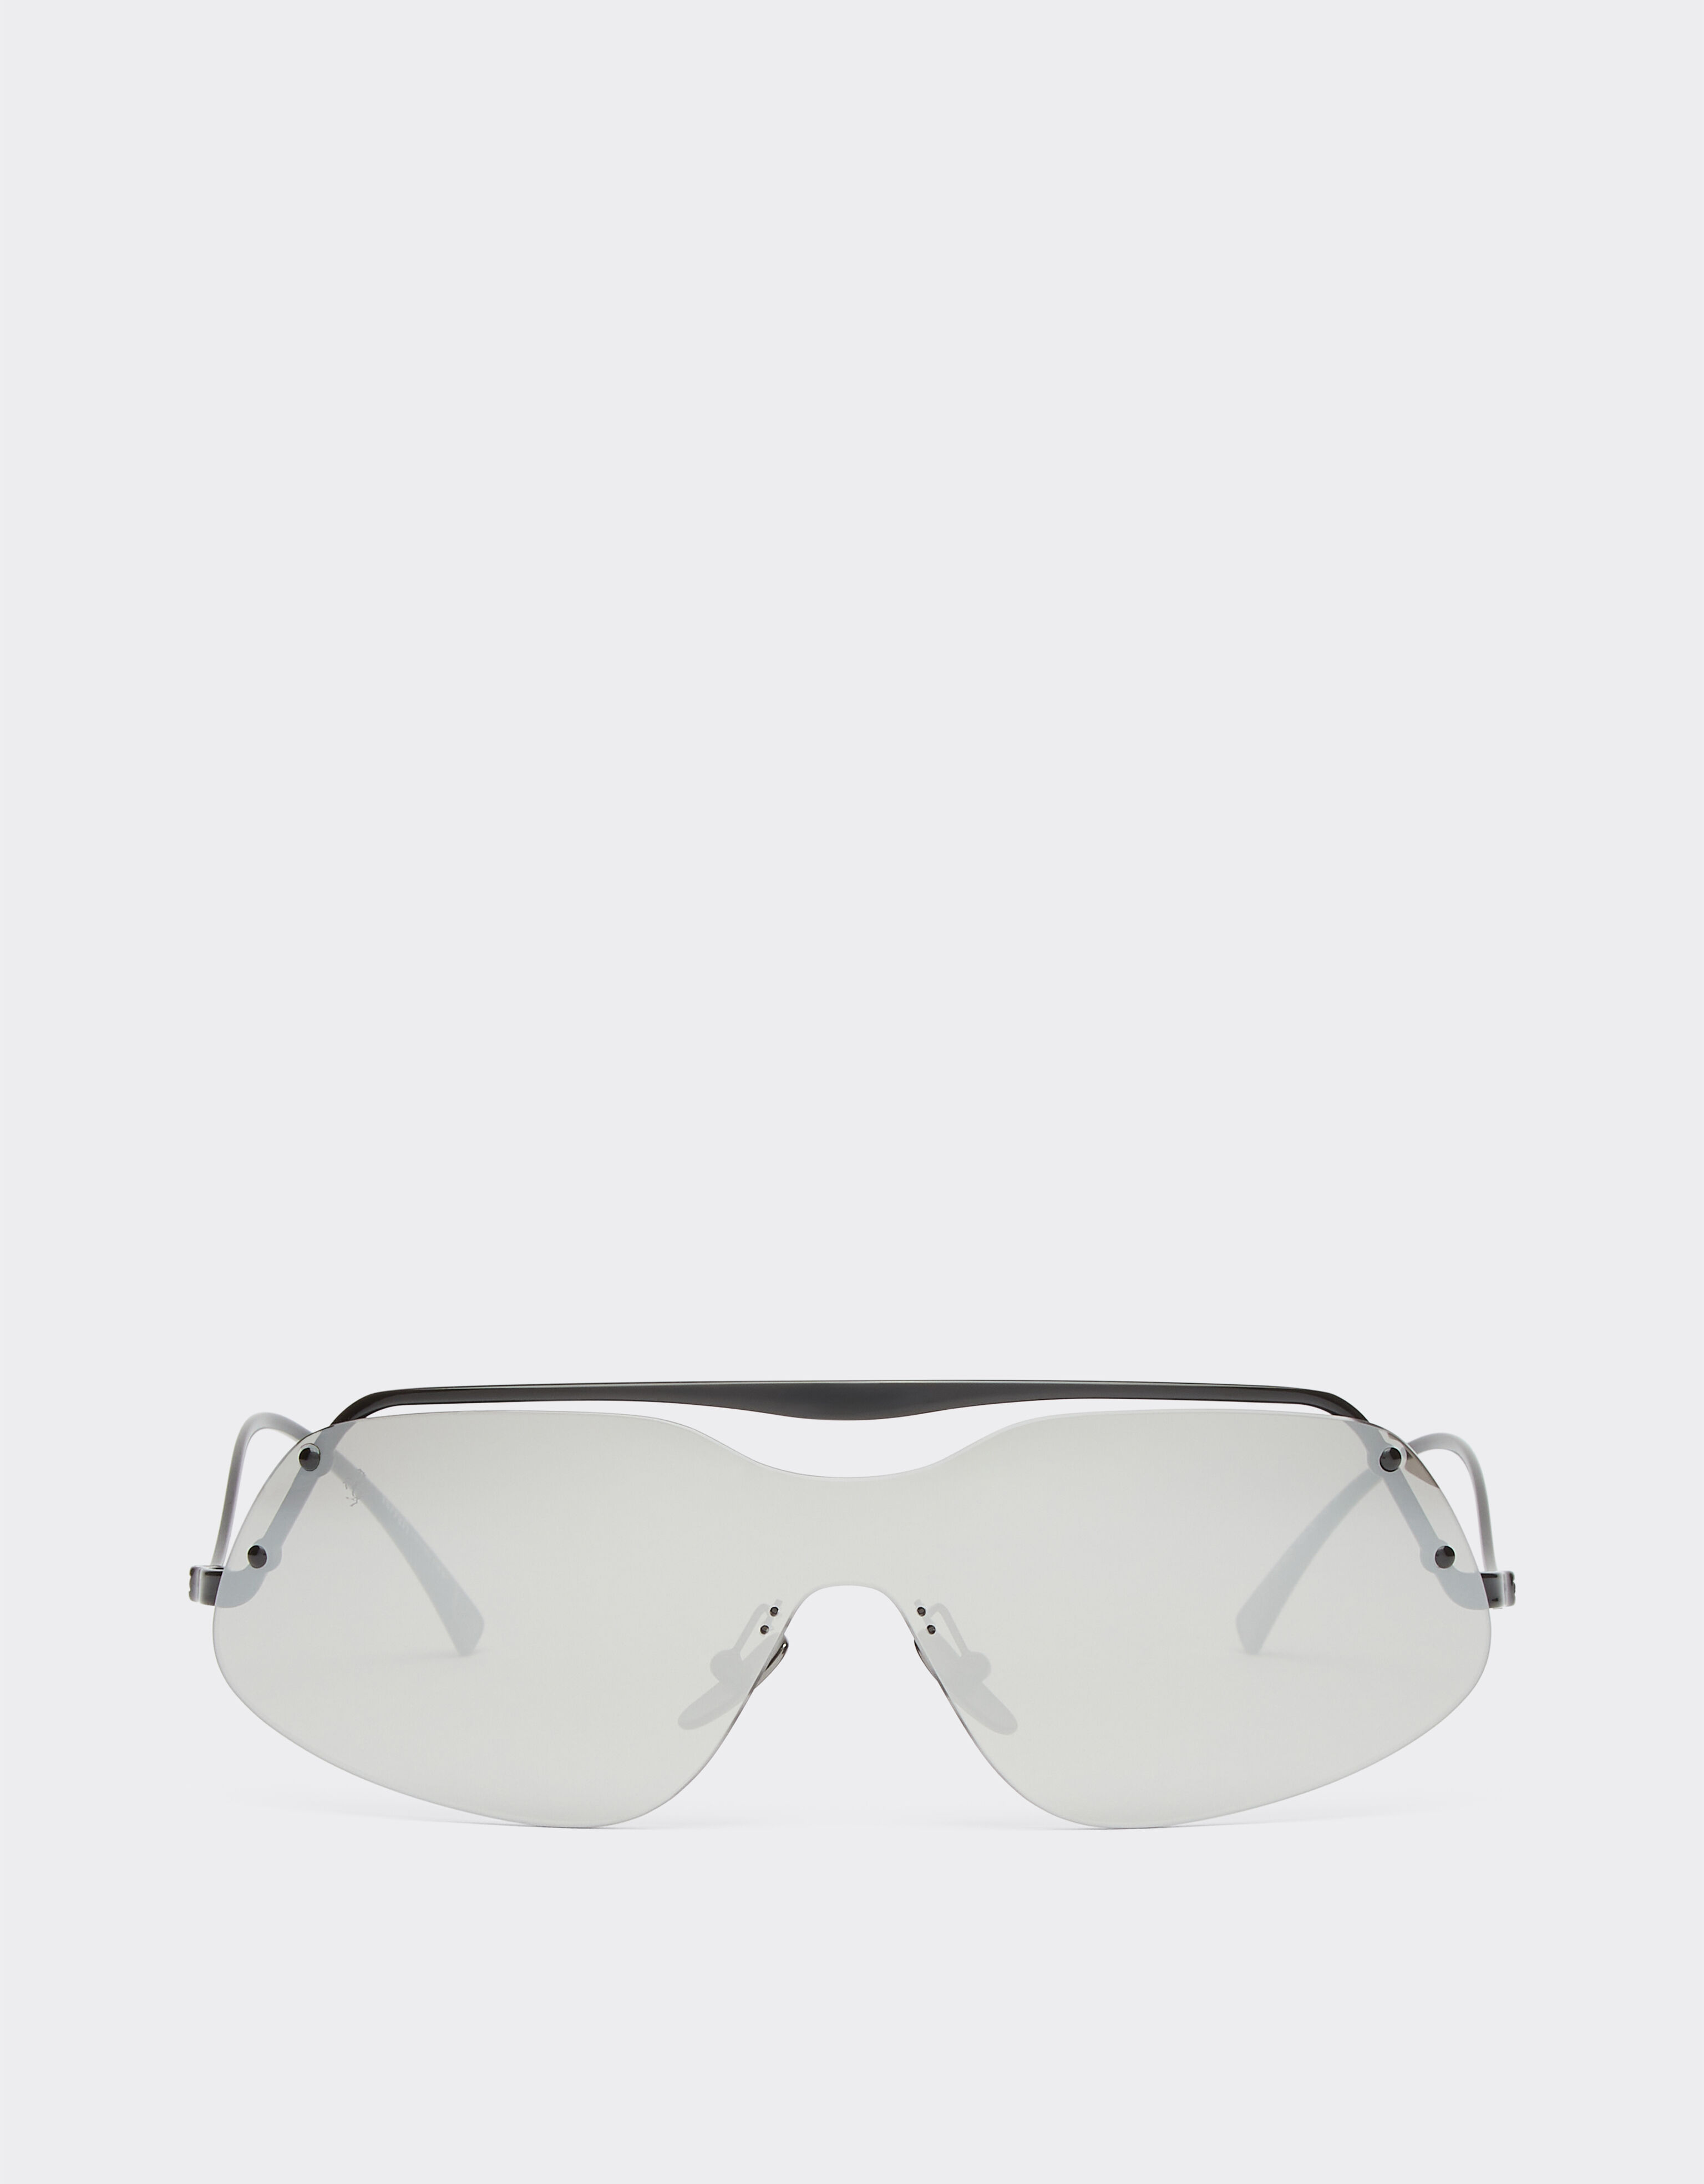 Ferrari Ferrari sunglasses in black metal with mirror lenses Optical White F1258f